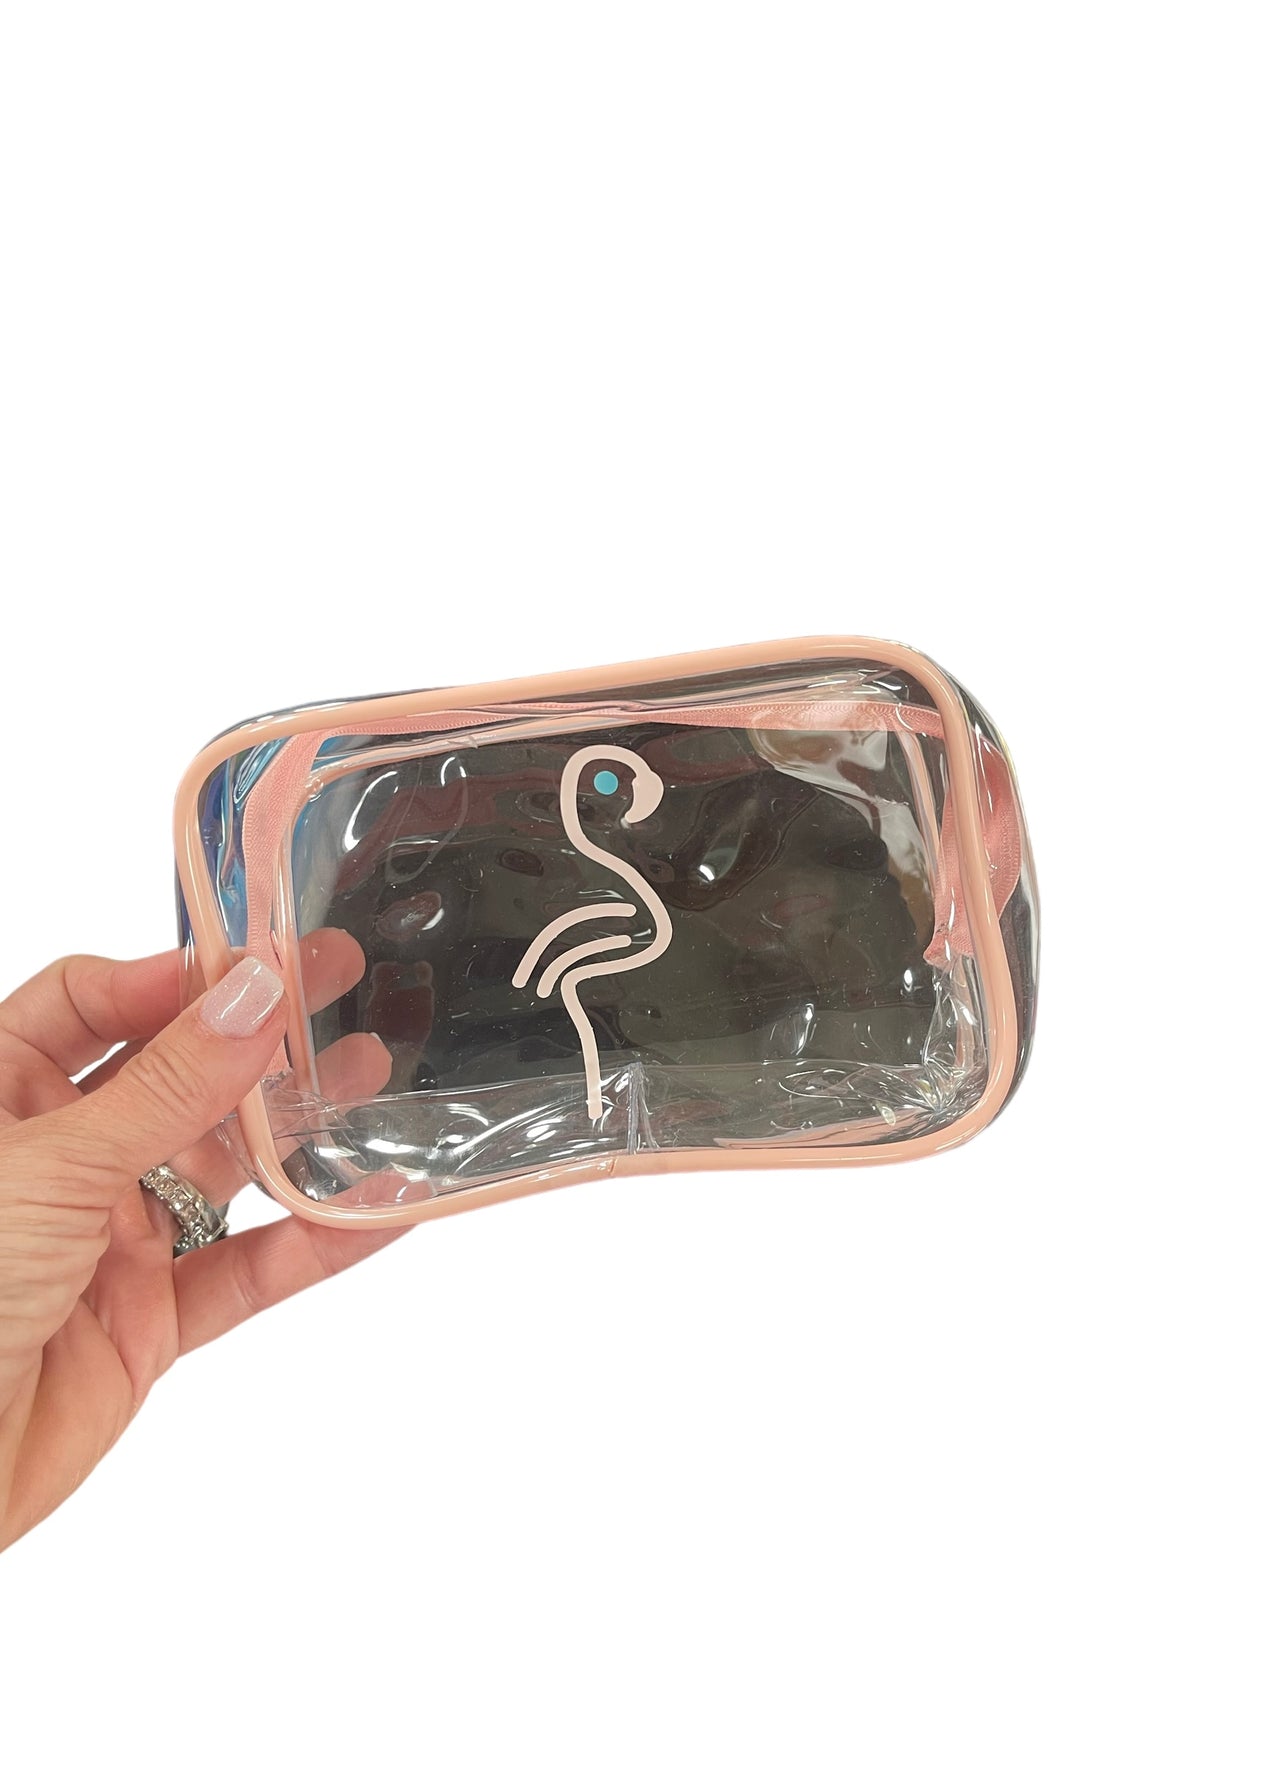 Flamingo- clear cosmetic bag